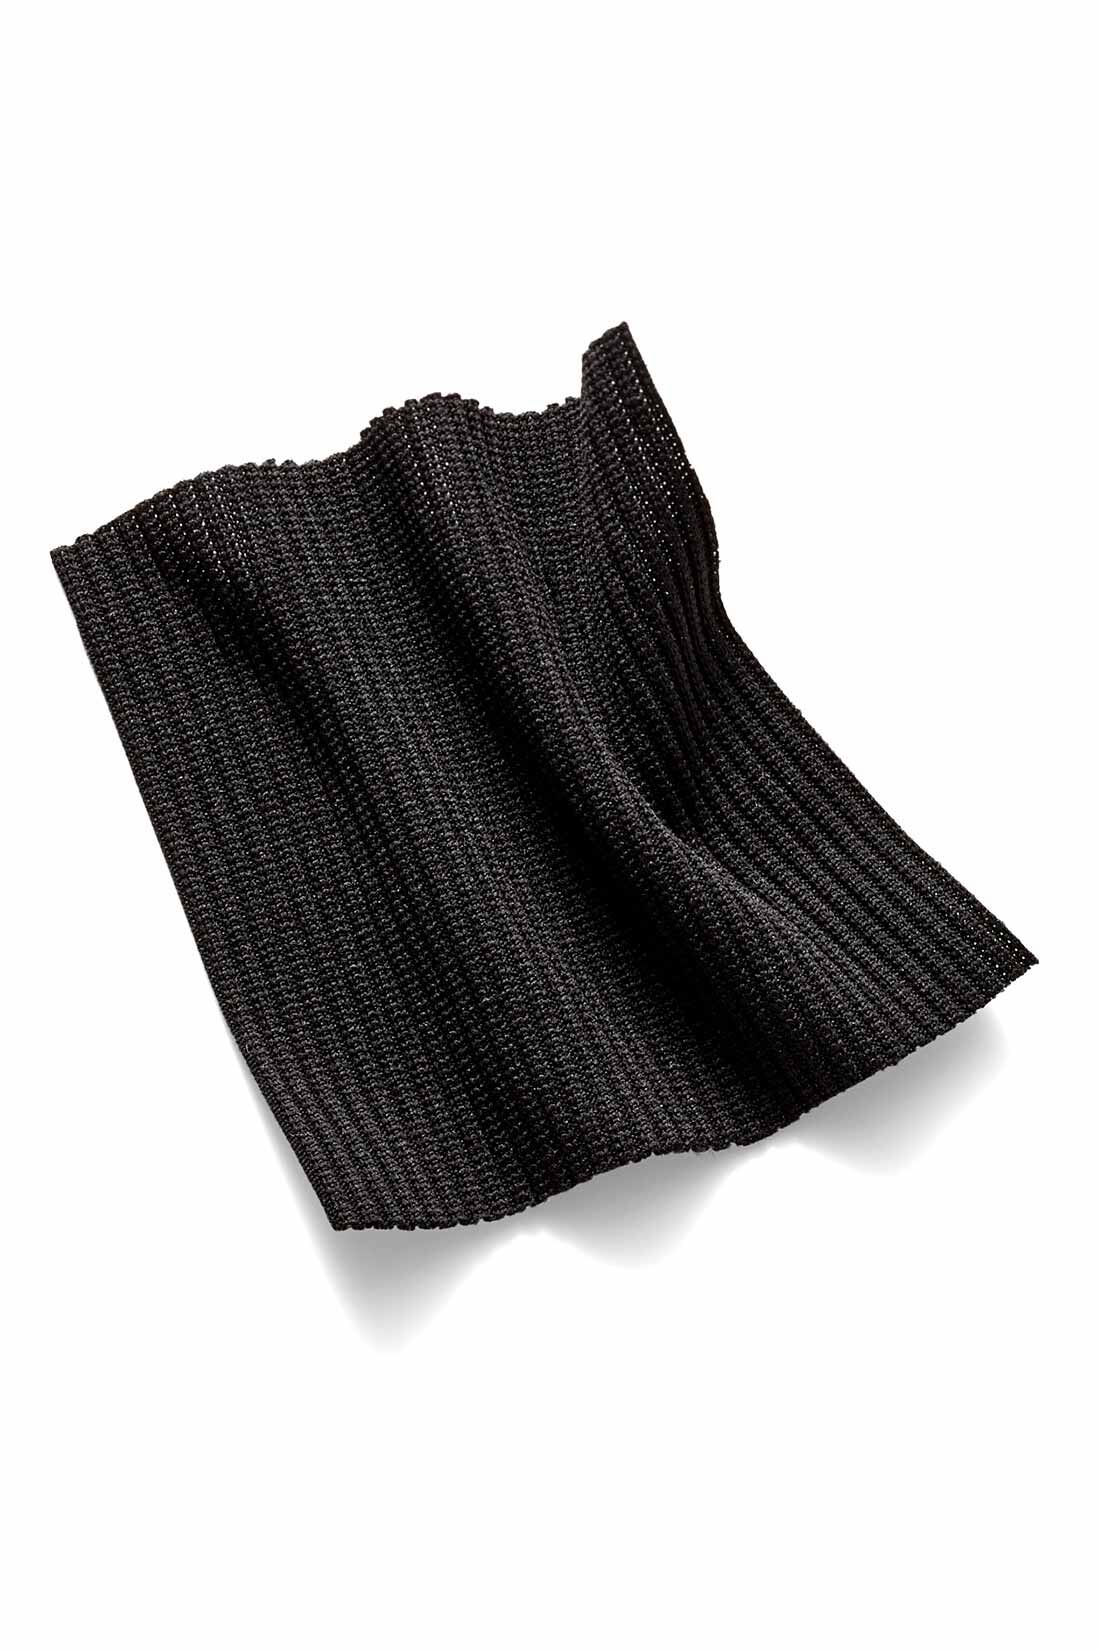 IEDIT|IEDIT[イディット]　福田麻琴さんコラボ リブ素材のフレアーパンツ〈ブラック〉|肌に張り付きにくく着心地も快適なストレッチのきいた細めリブ素材。洋服のように着られる上品なブラック。